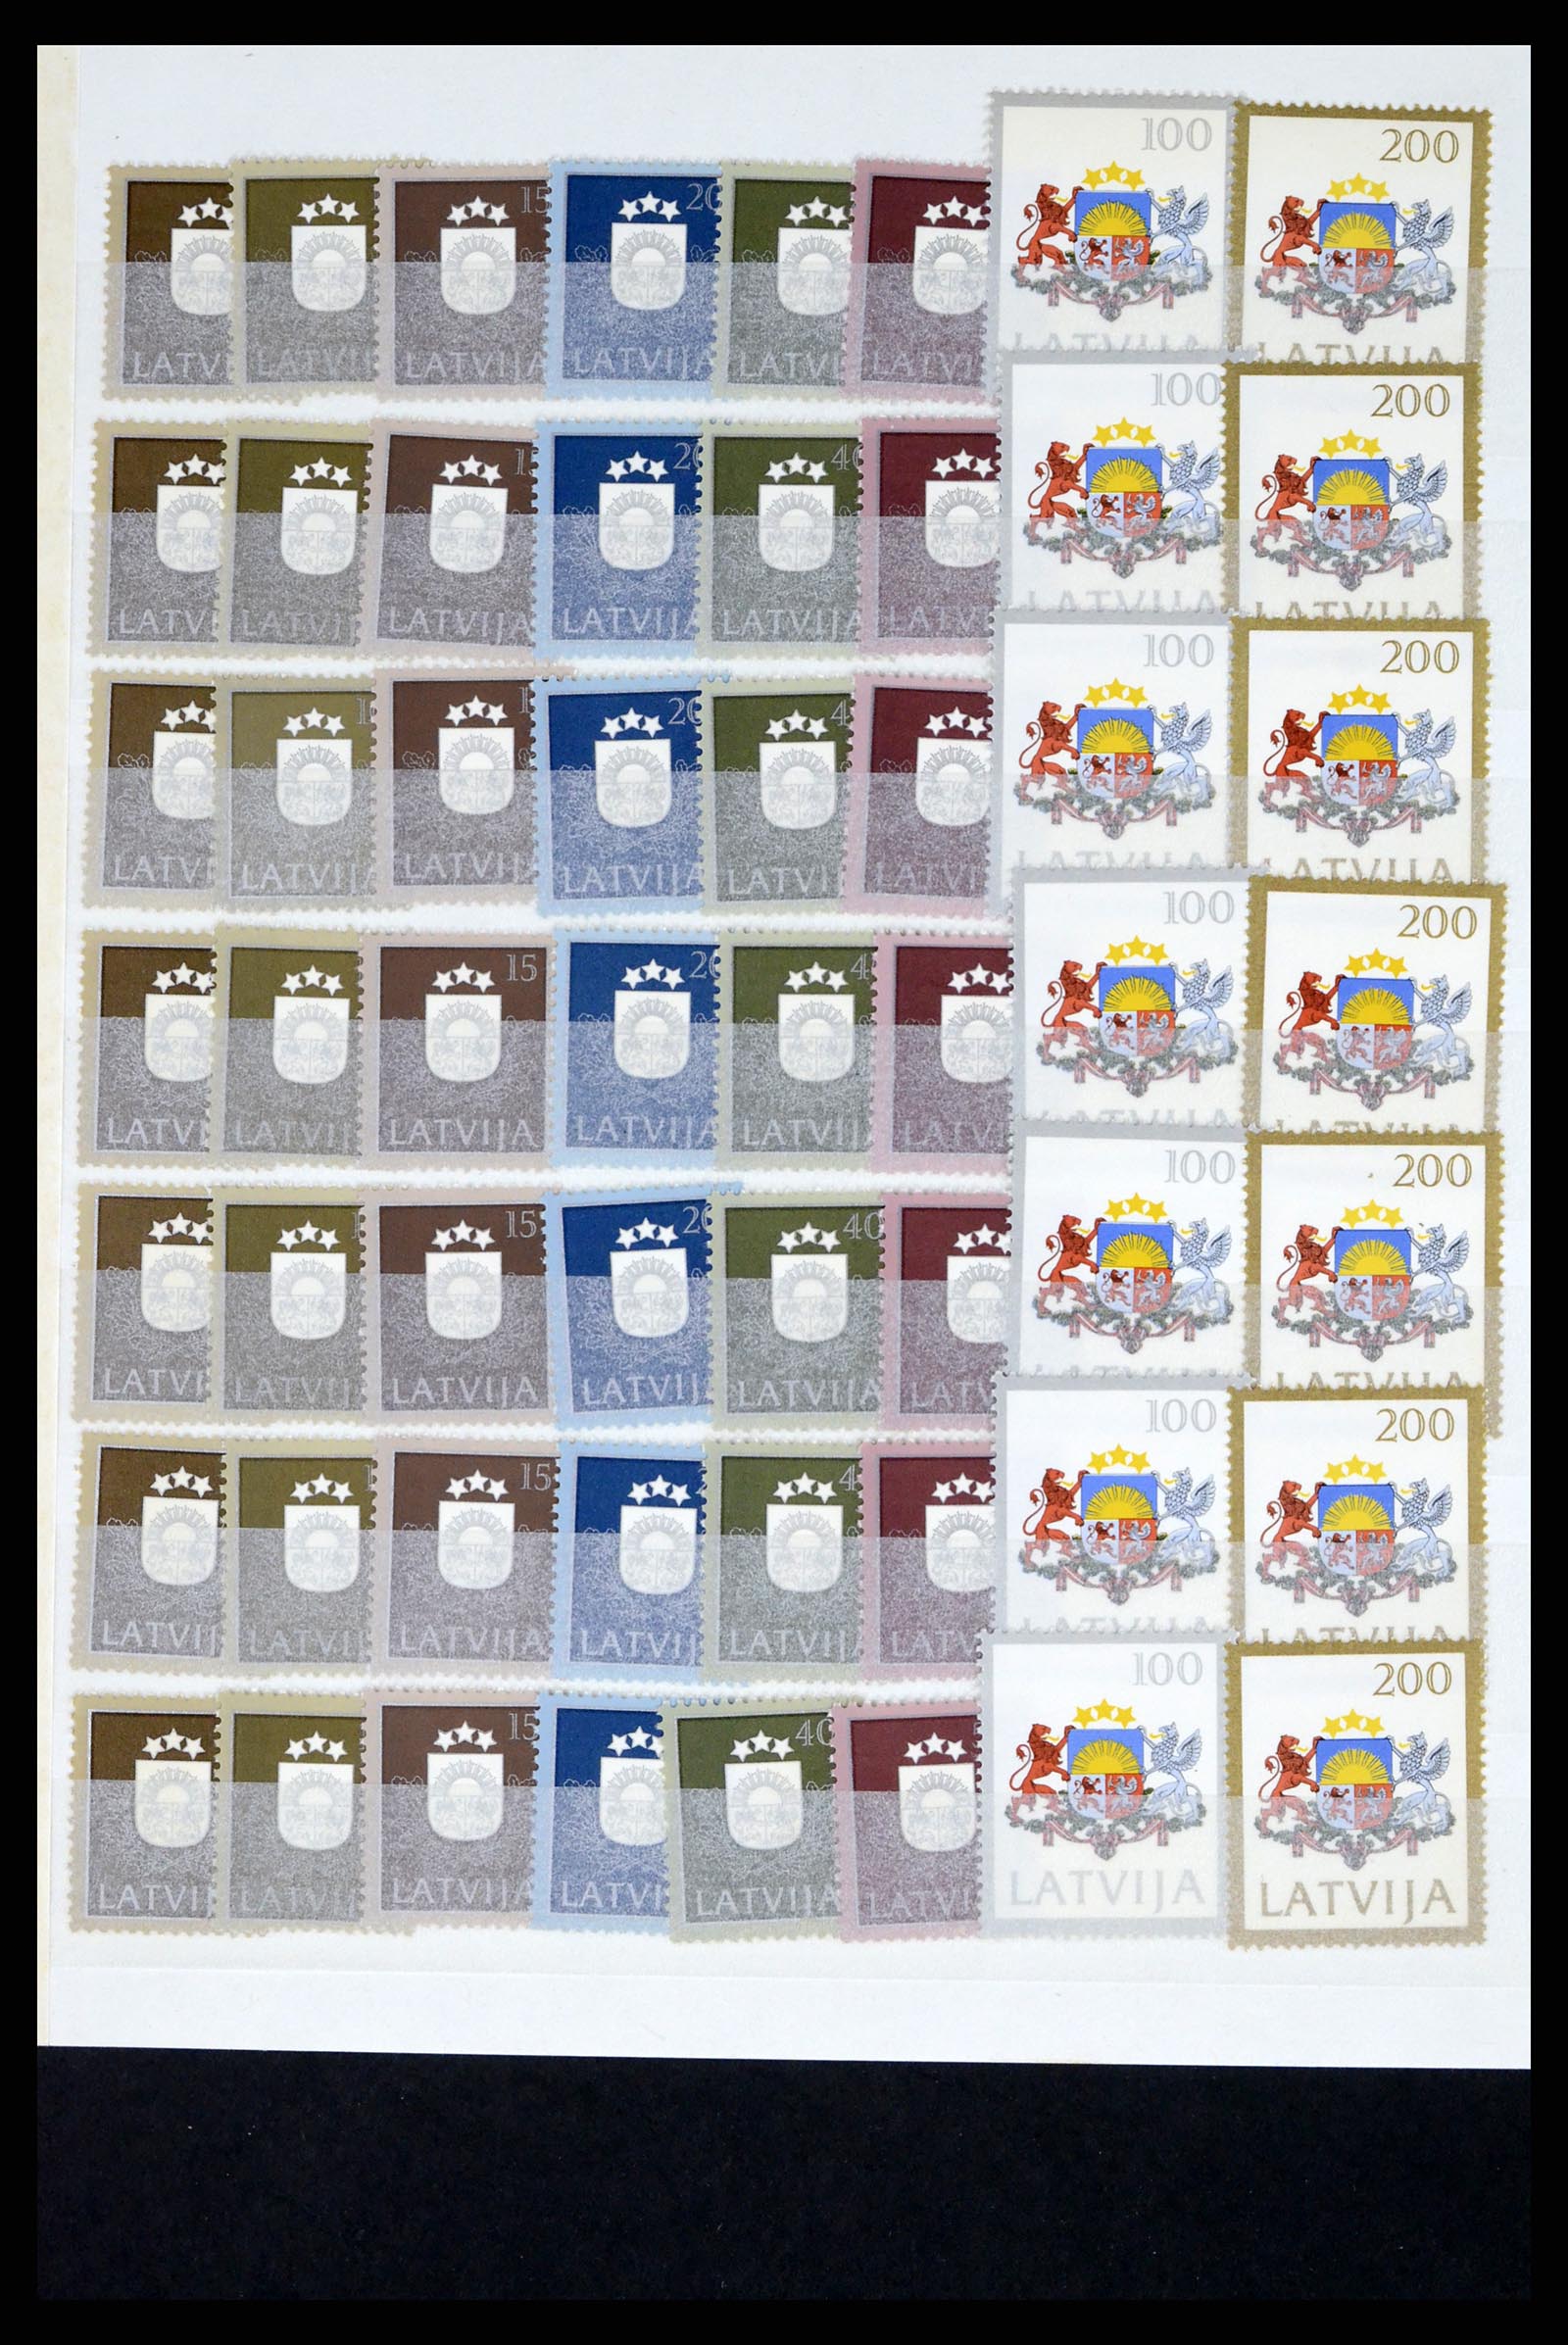 37351 297 - Postzegelverzameling 37351 Europese landen postfris 1990-2000.